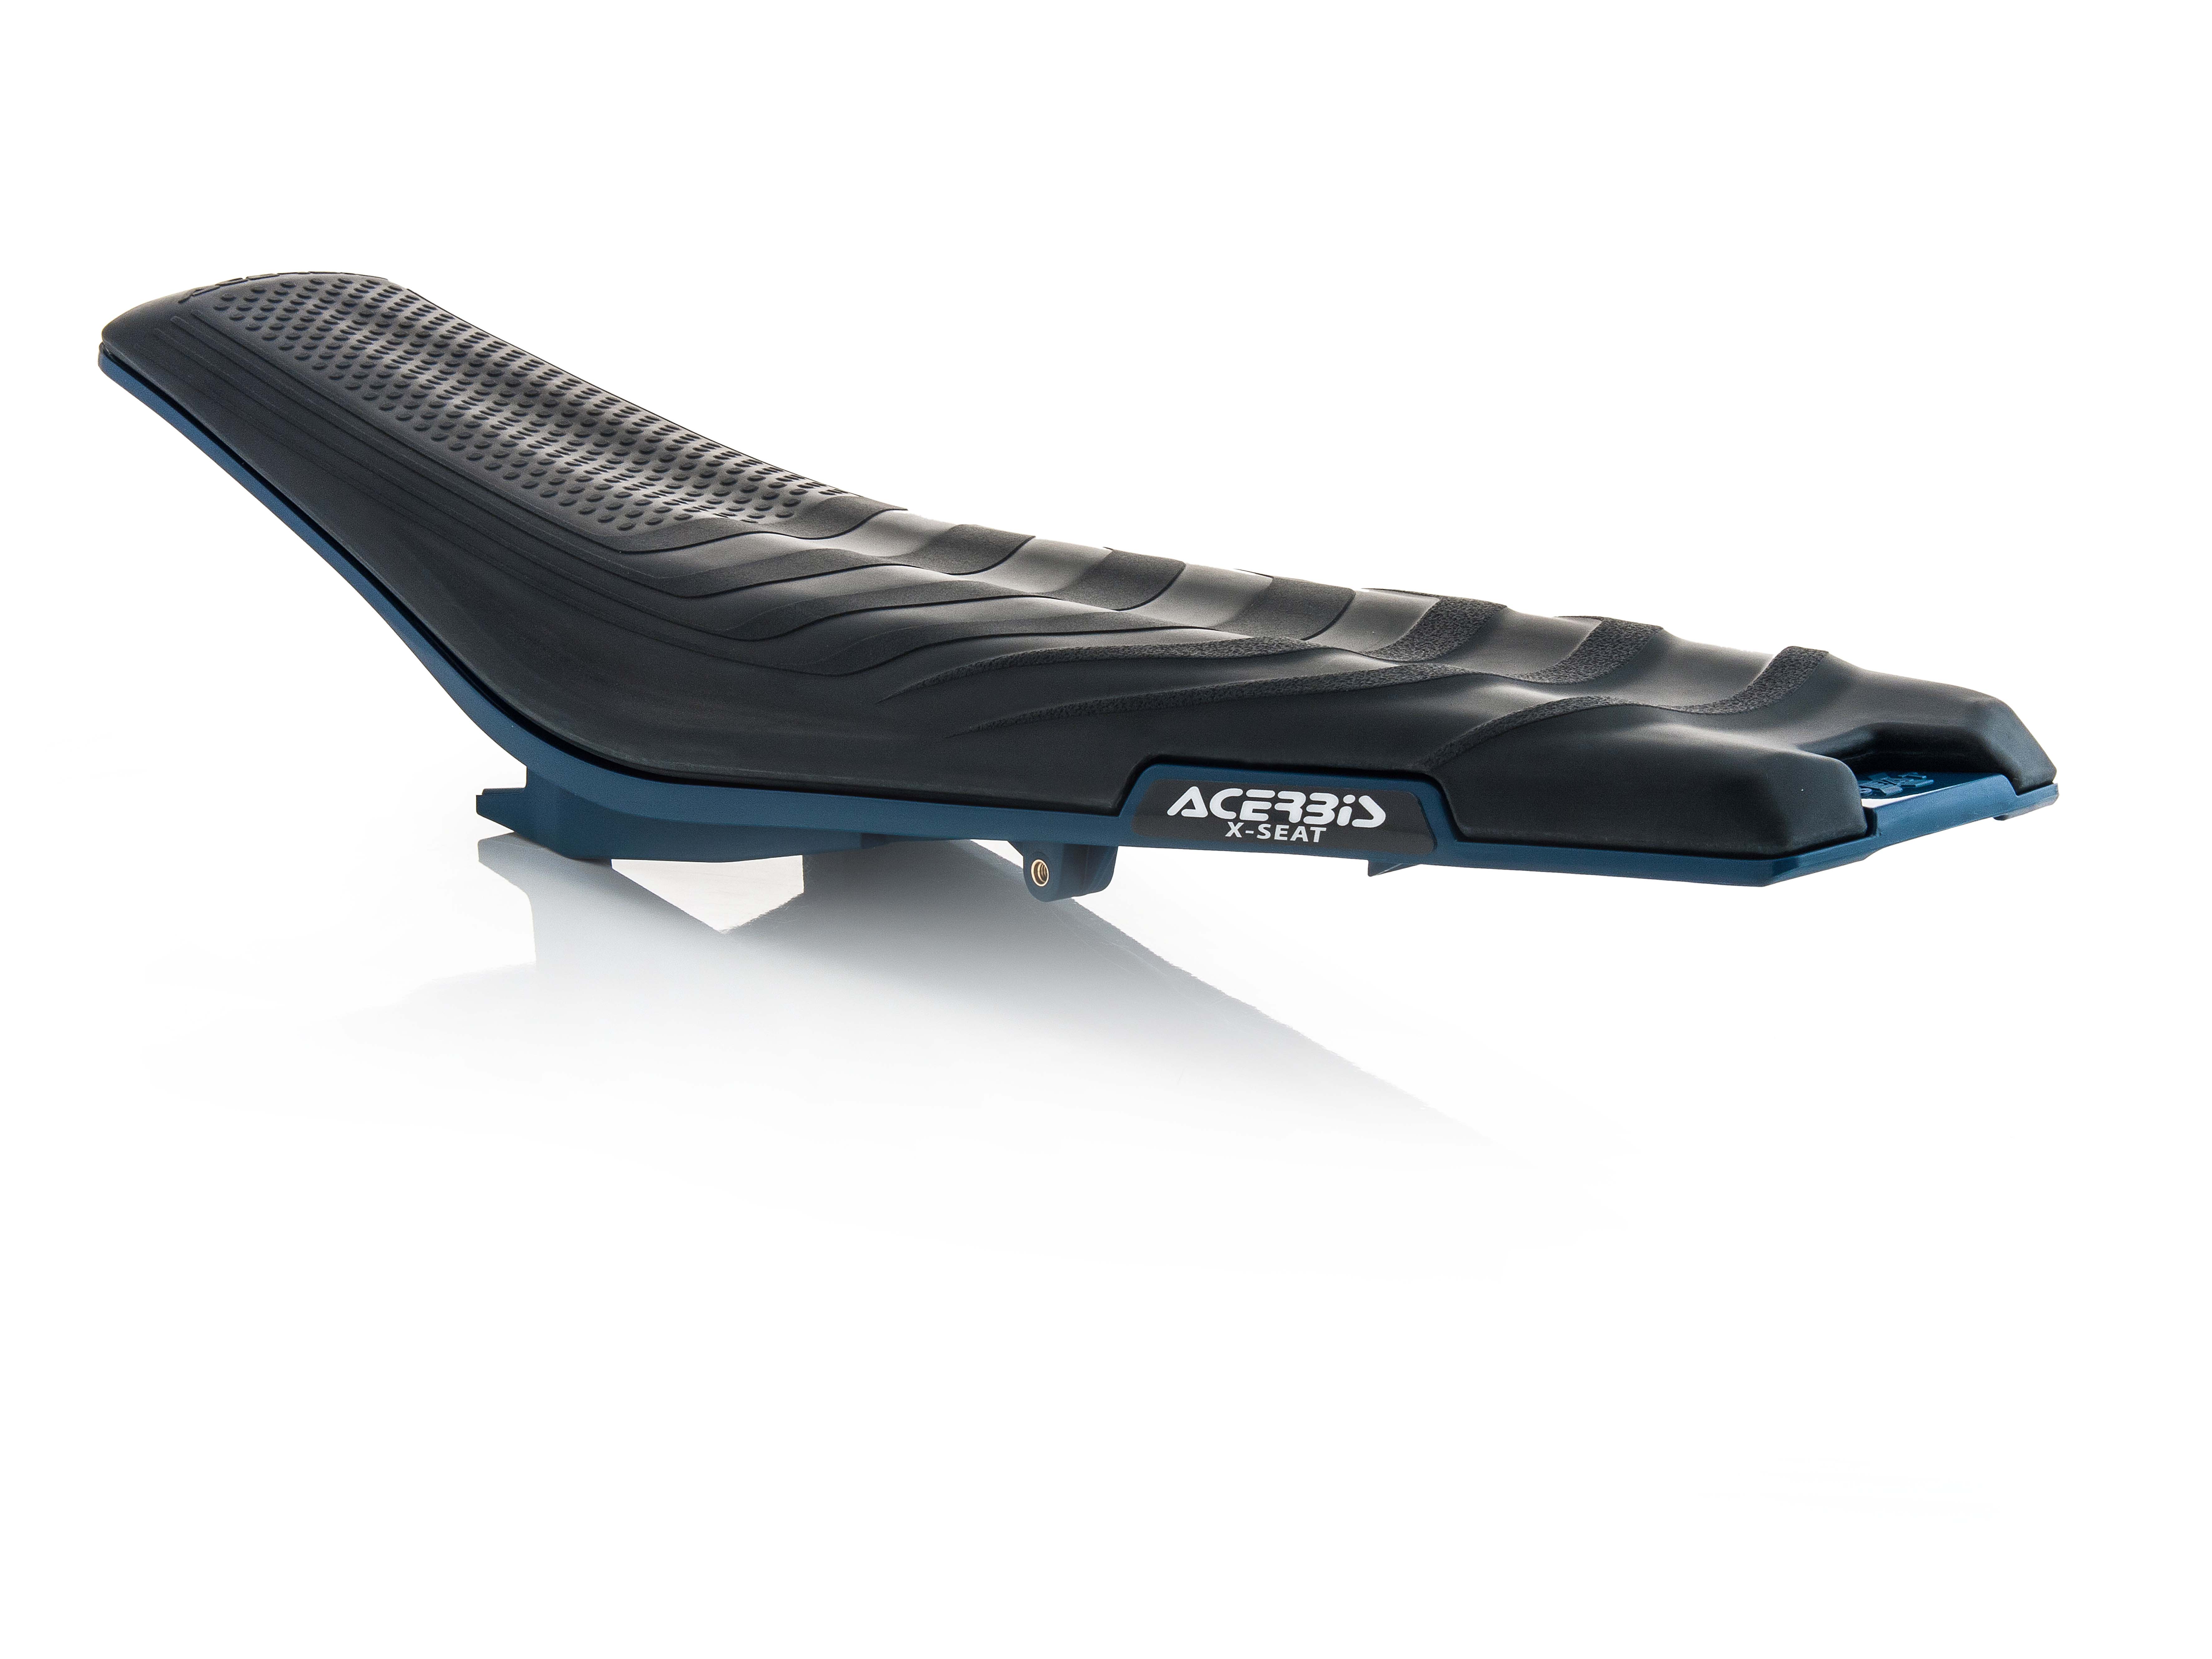 Acerbis ACERBIS 0021880 X-SEAT SELLE SOFT COMFORT BLEU HUSQVARNA FC 250 2018 18 